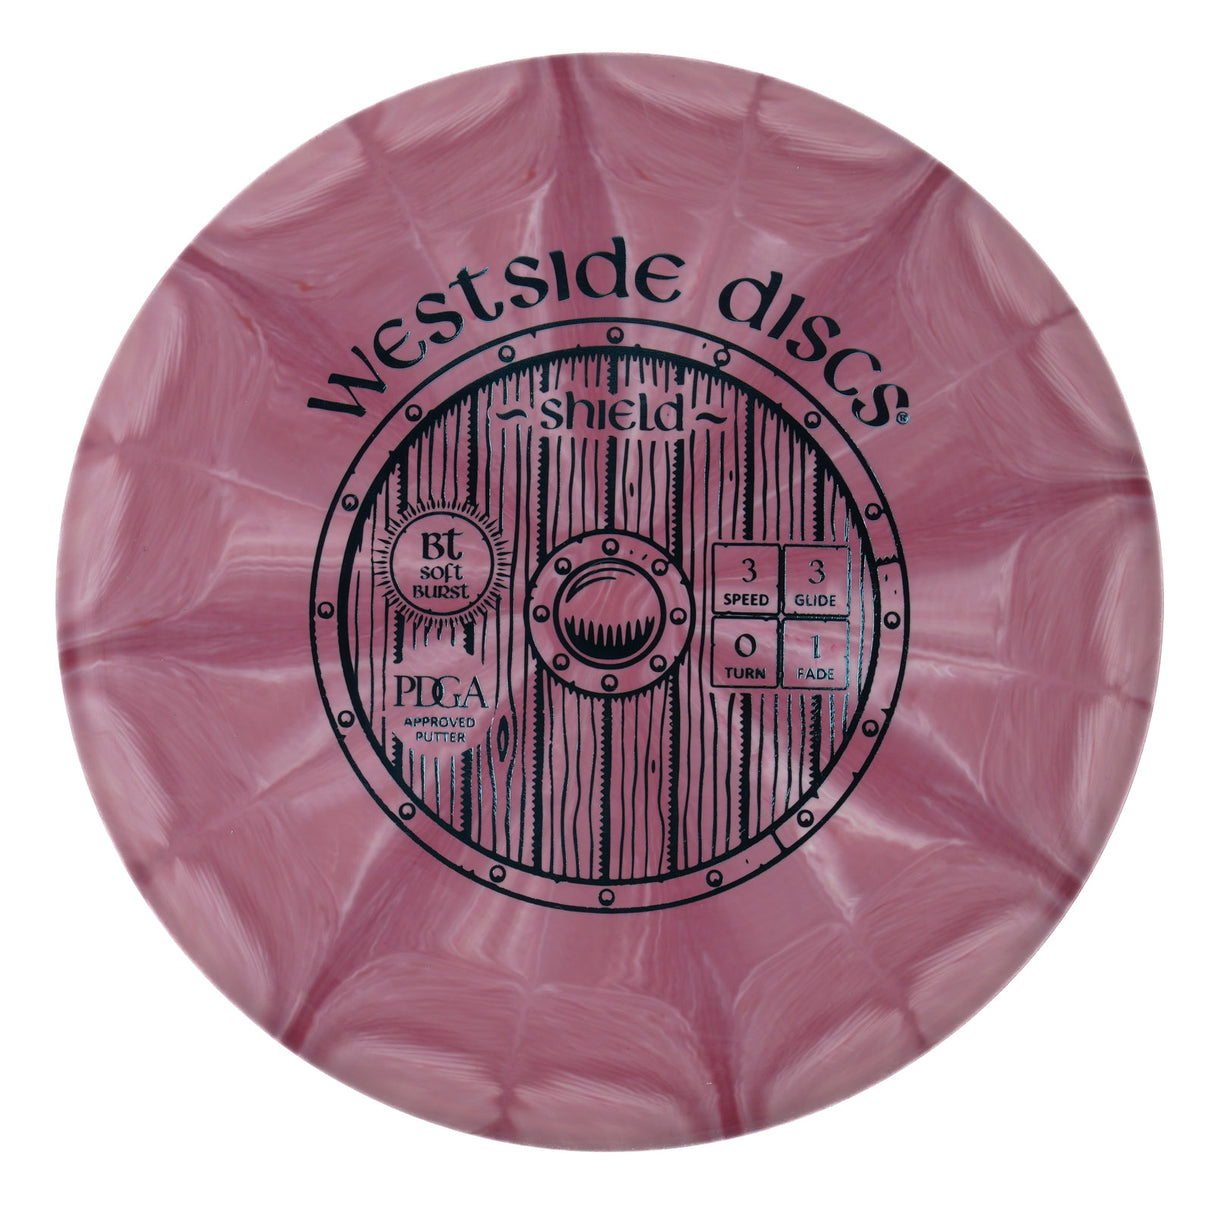 Westside Shield - BT Soft Burst 176g | Style 0002